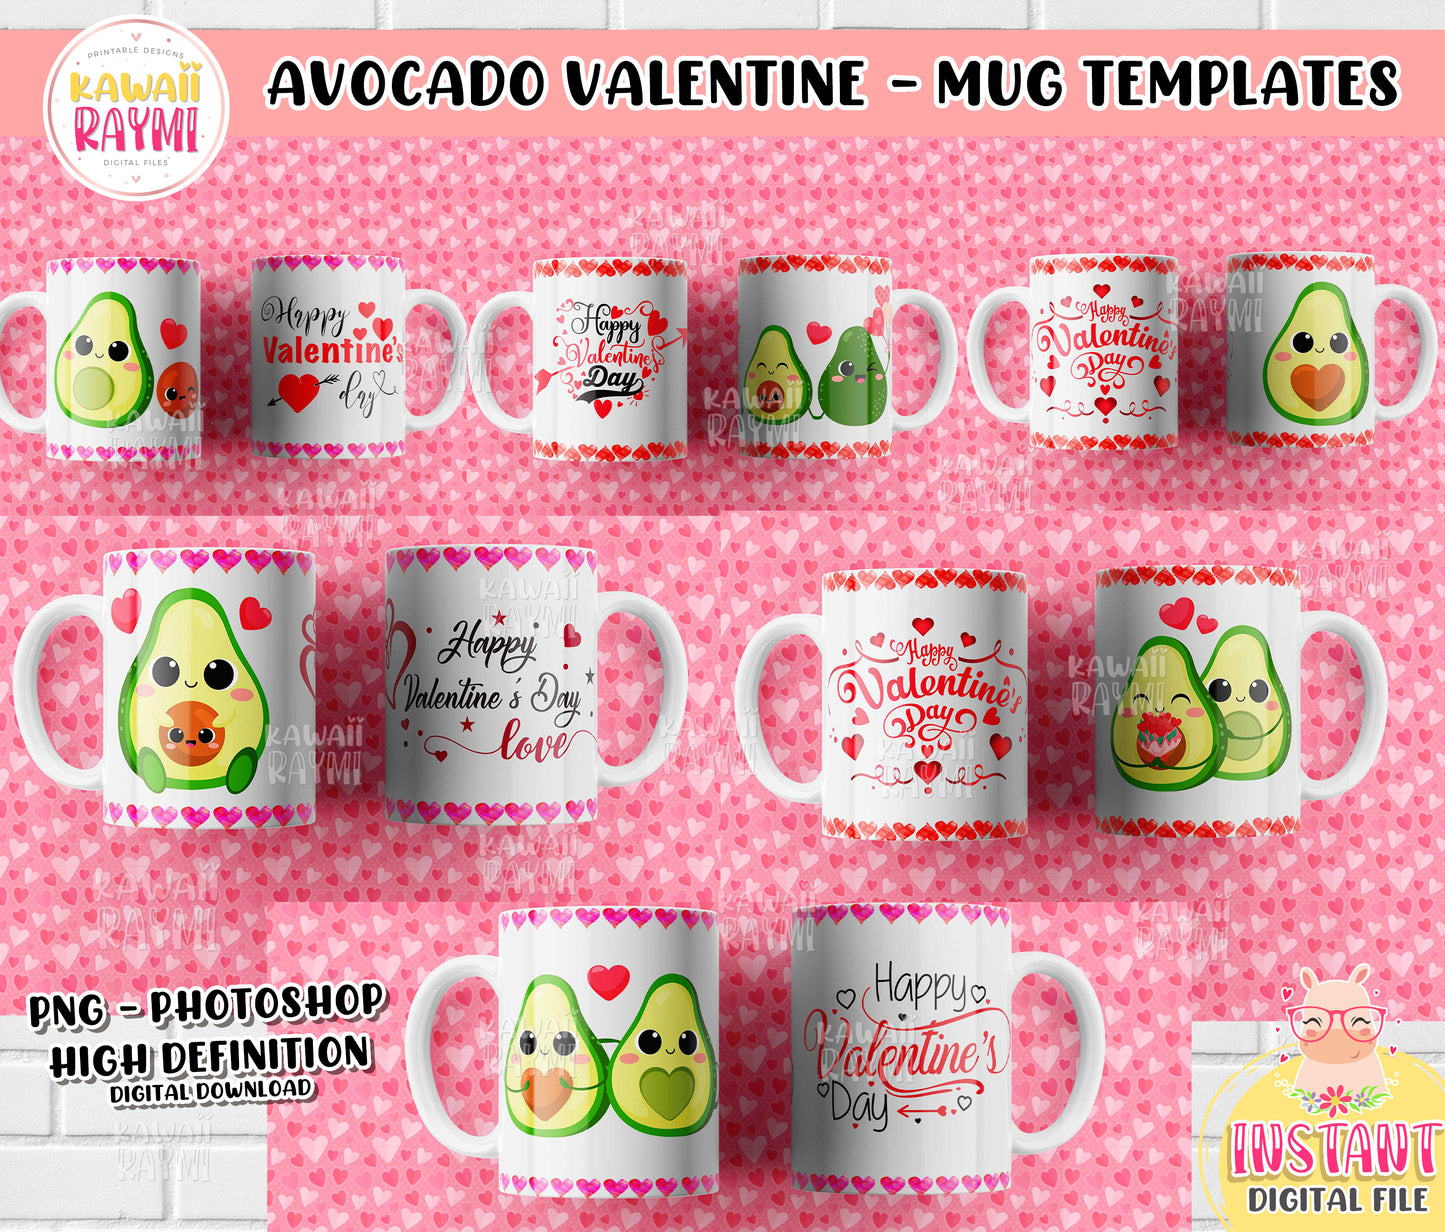 Avocado valentine mug templates, png, photoshop, instant download